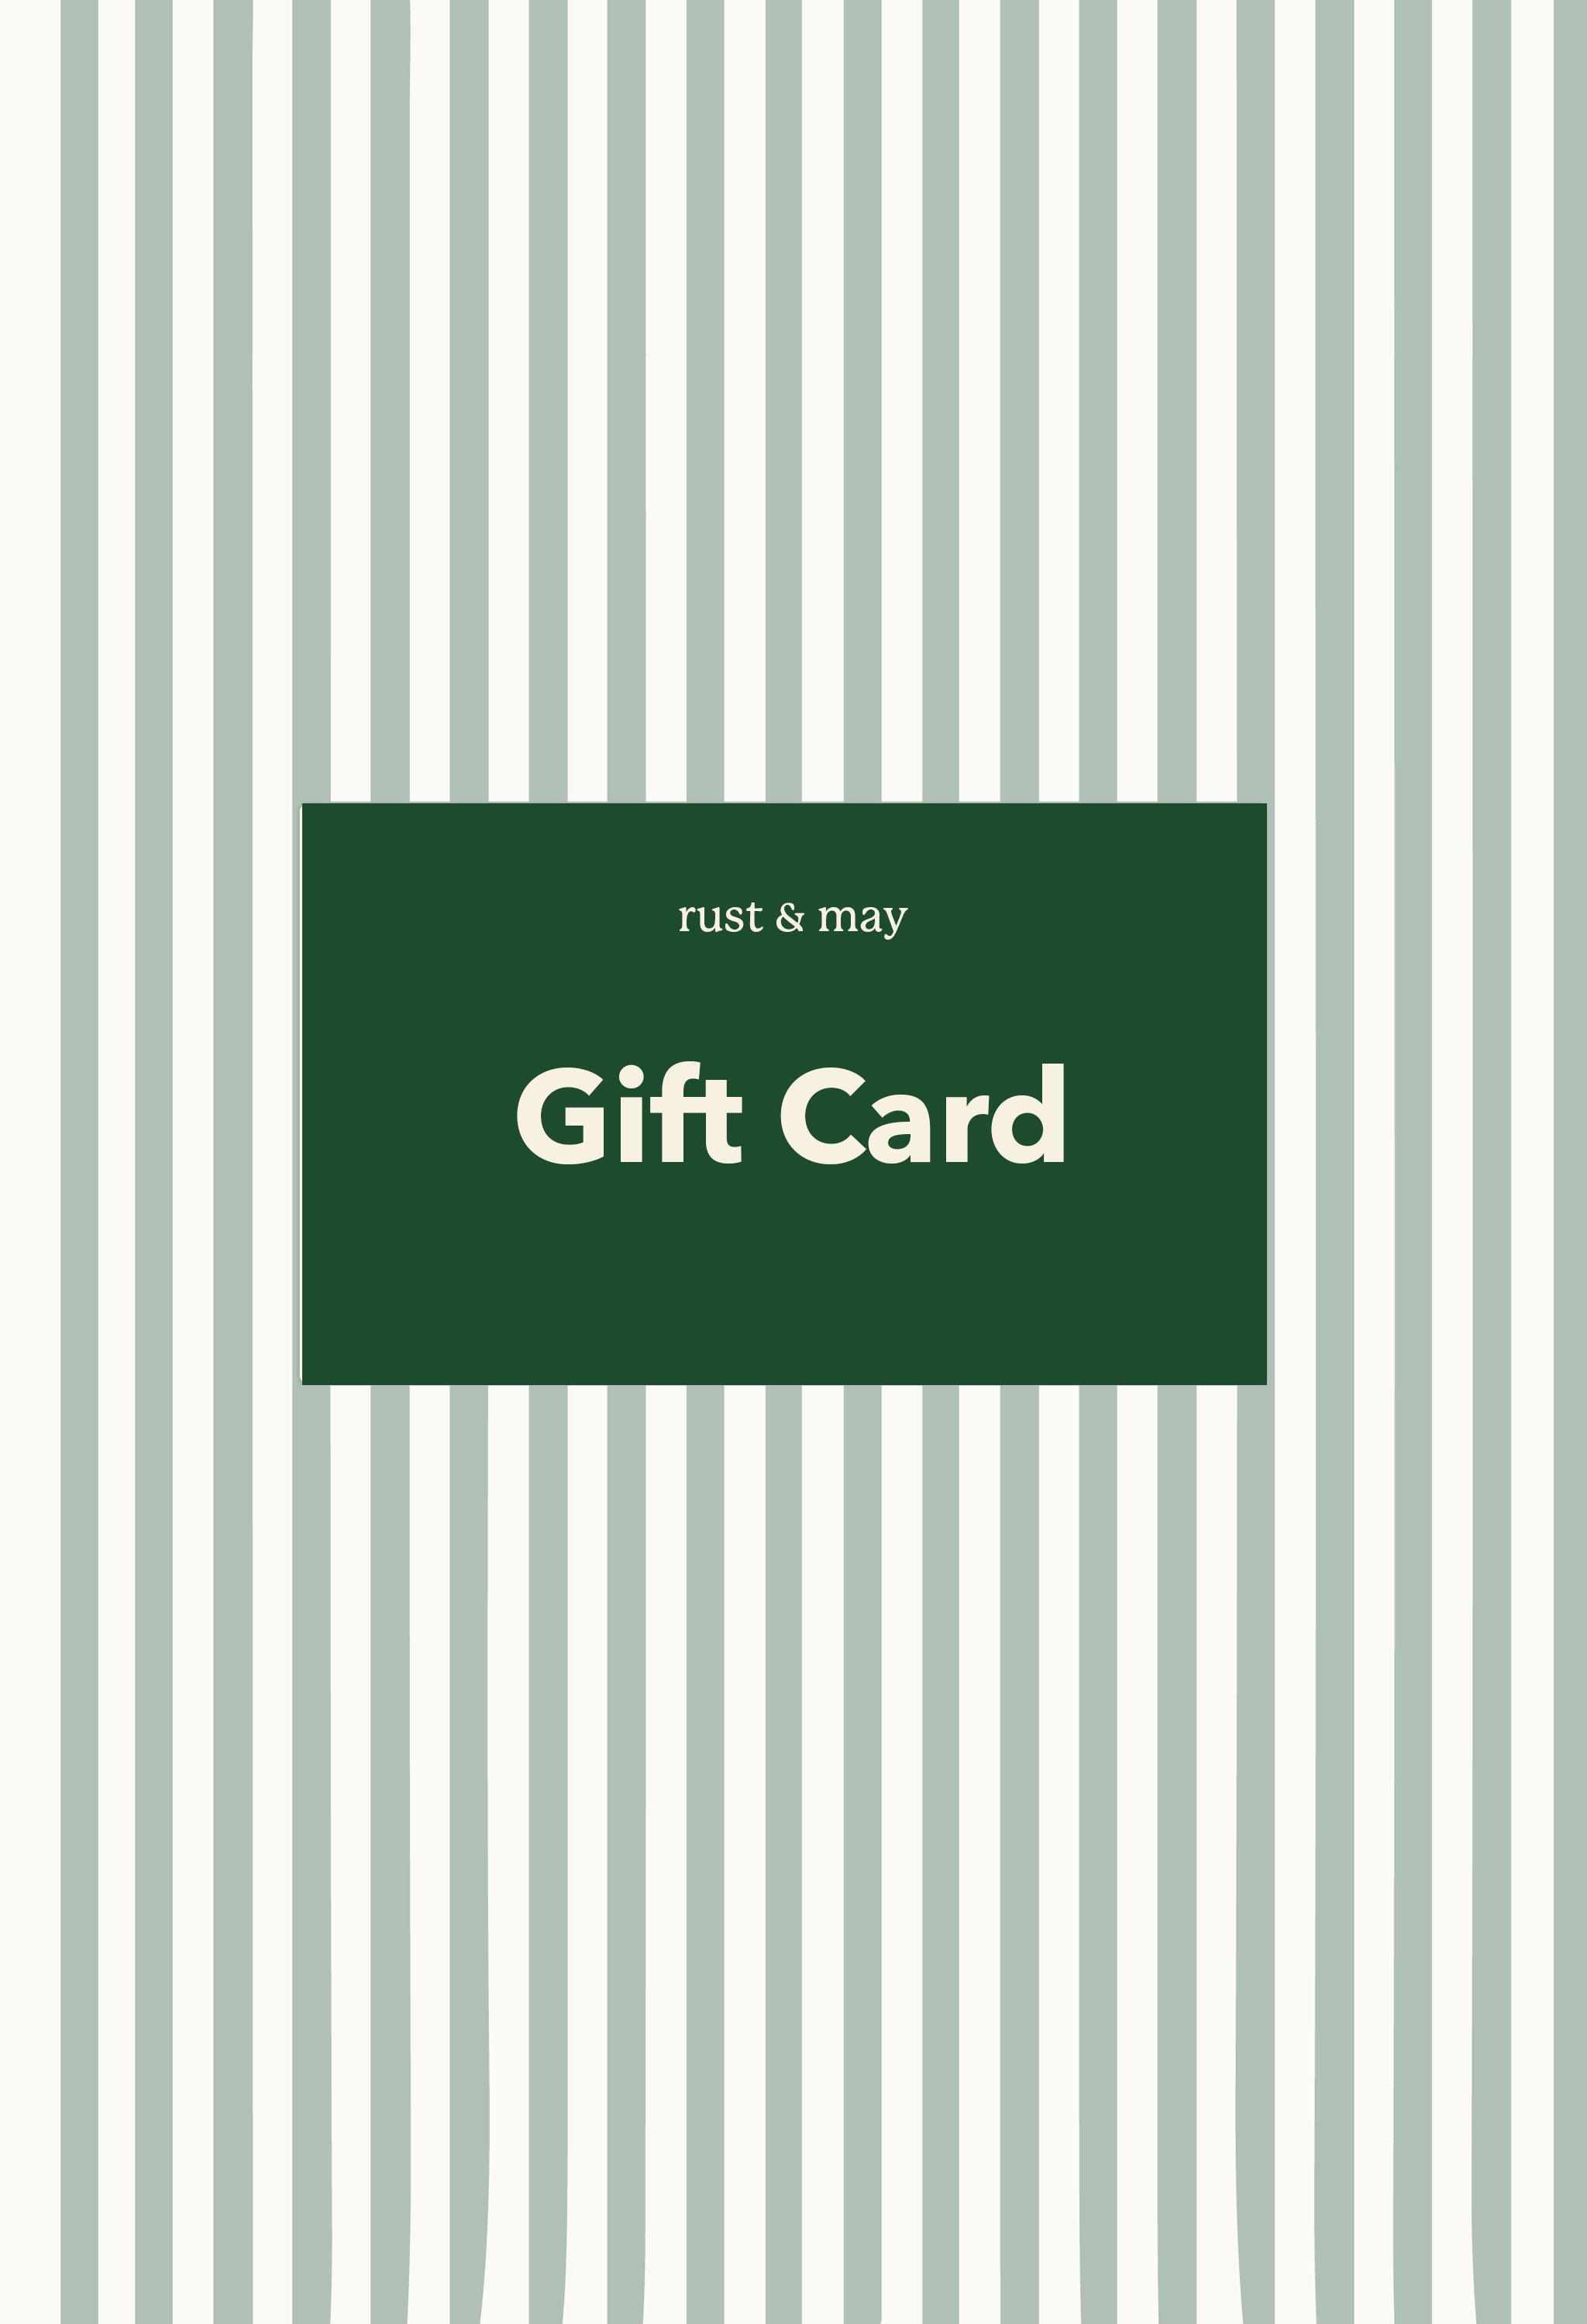 rust & may Gift Card